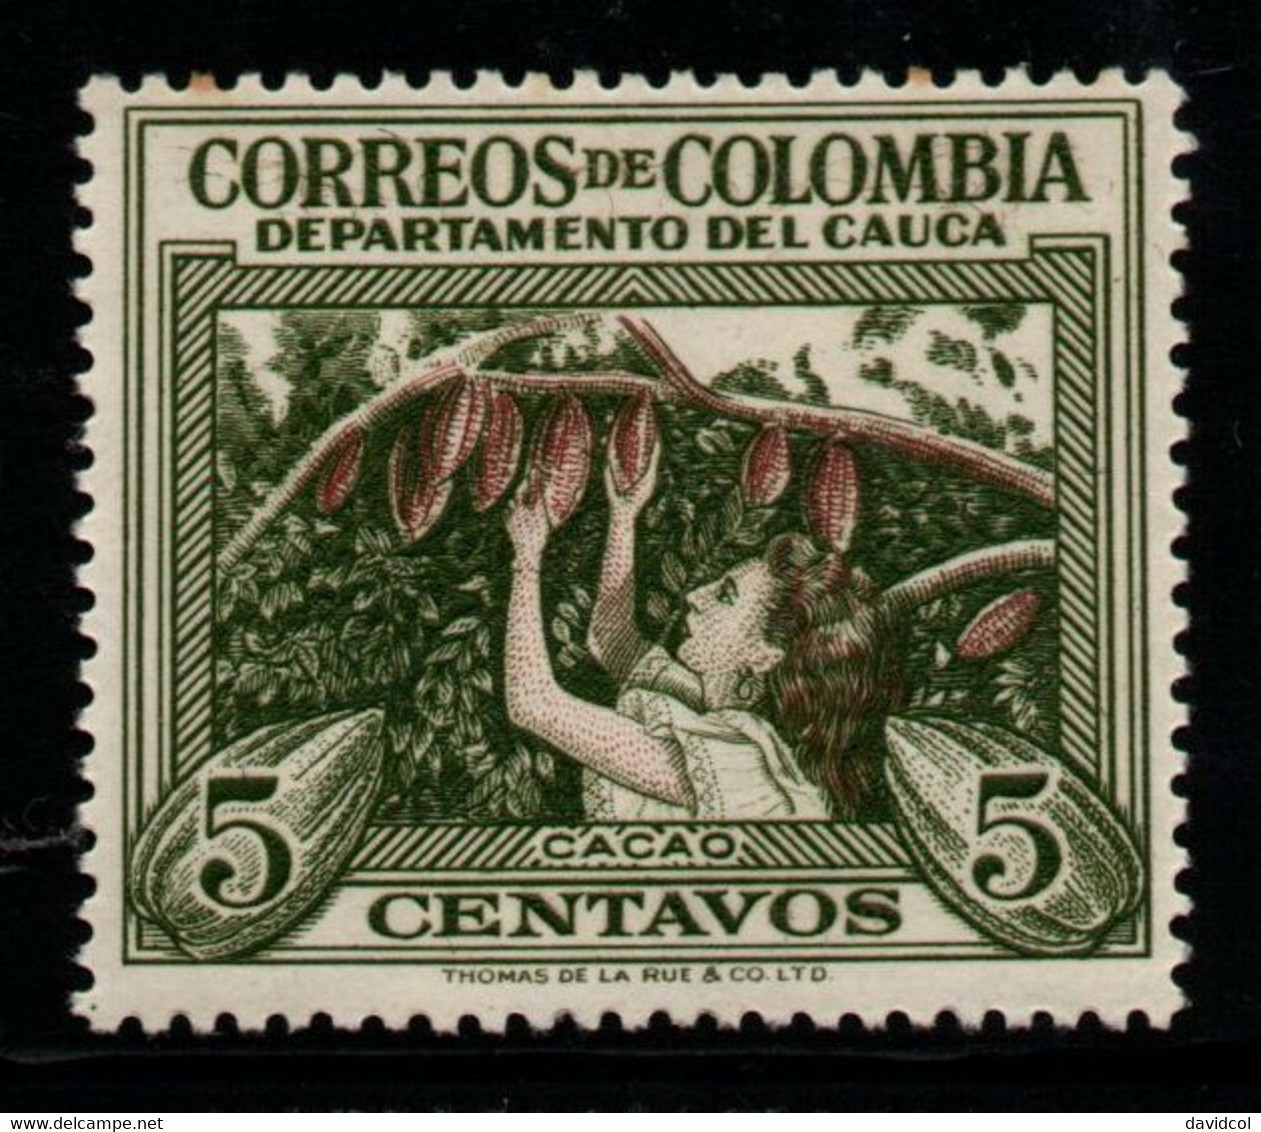 01J- KOLUMBIEN - 1956 - MI#: 773 - MNH - CAUCA / COCOA CROPS - COLOMBIAN DEPARTMENTS - Kolumbien